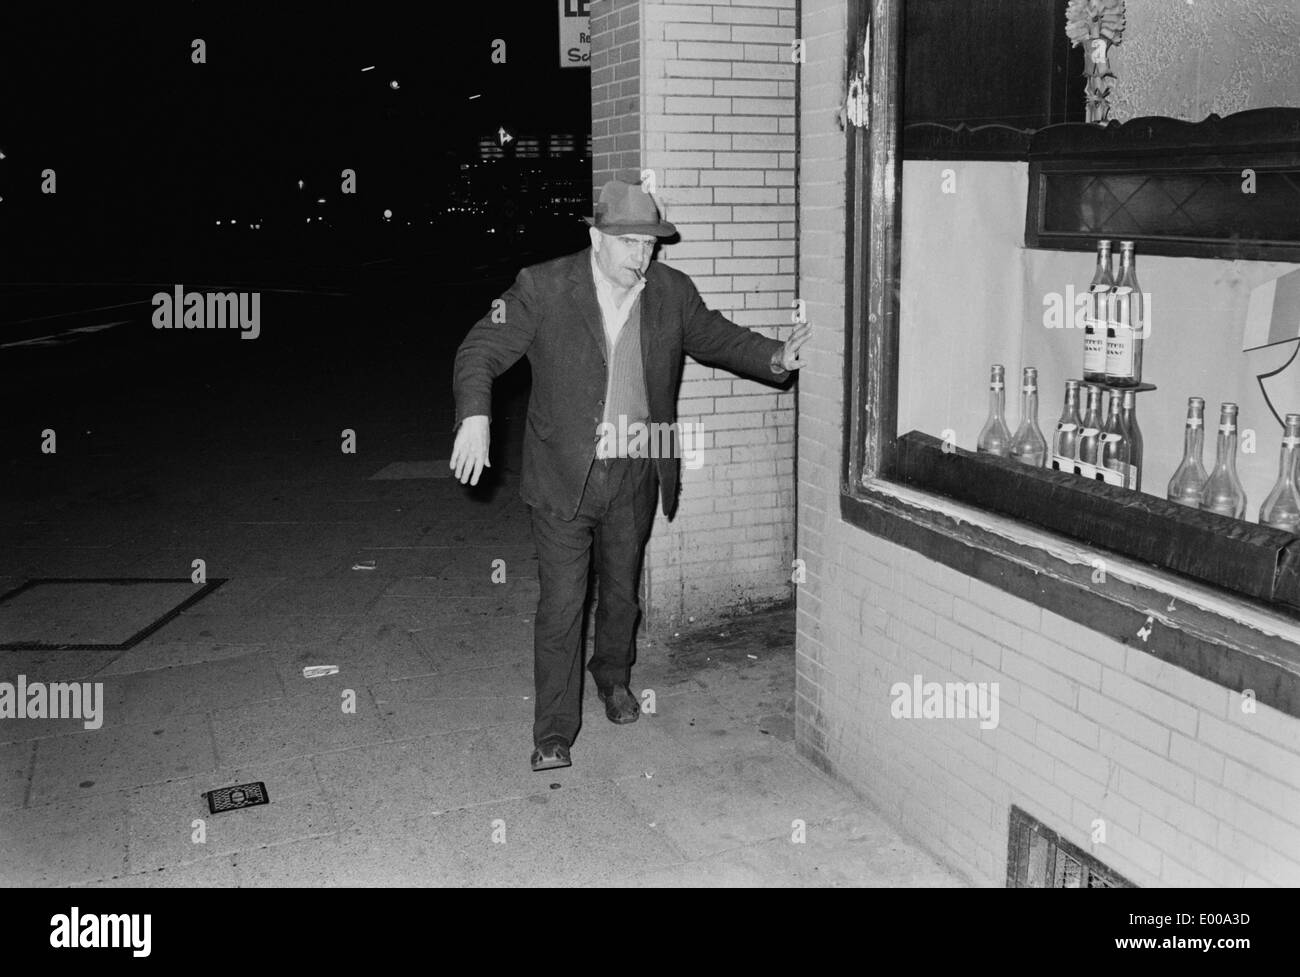 A drunkard on the street Stock Photo